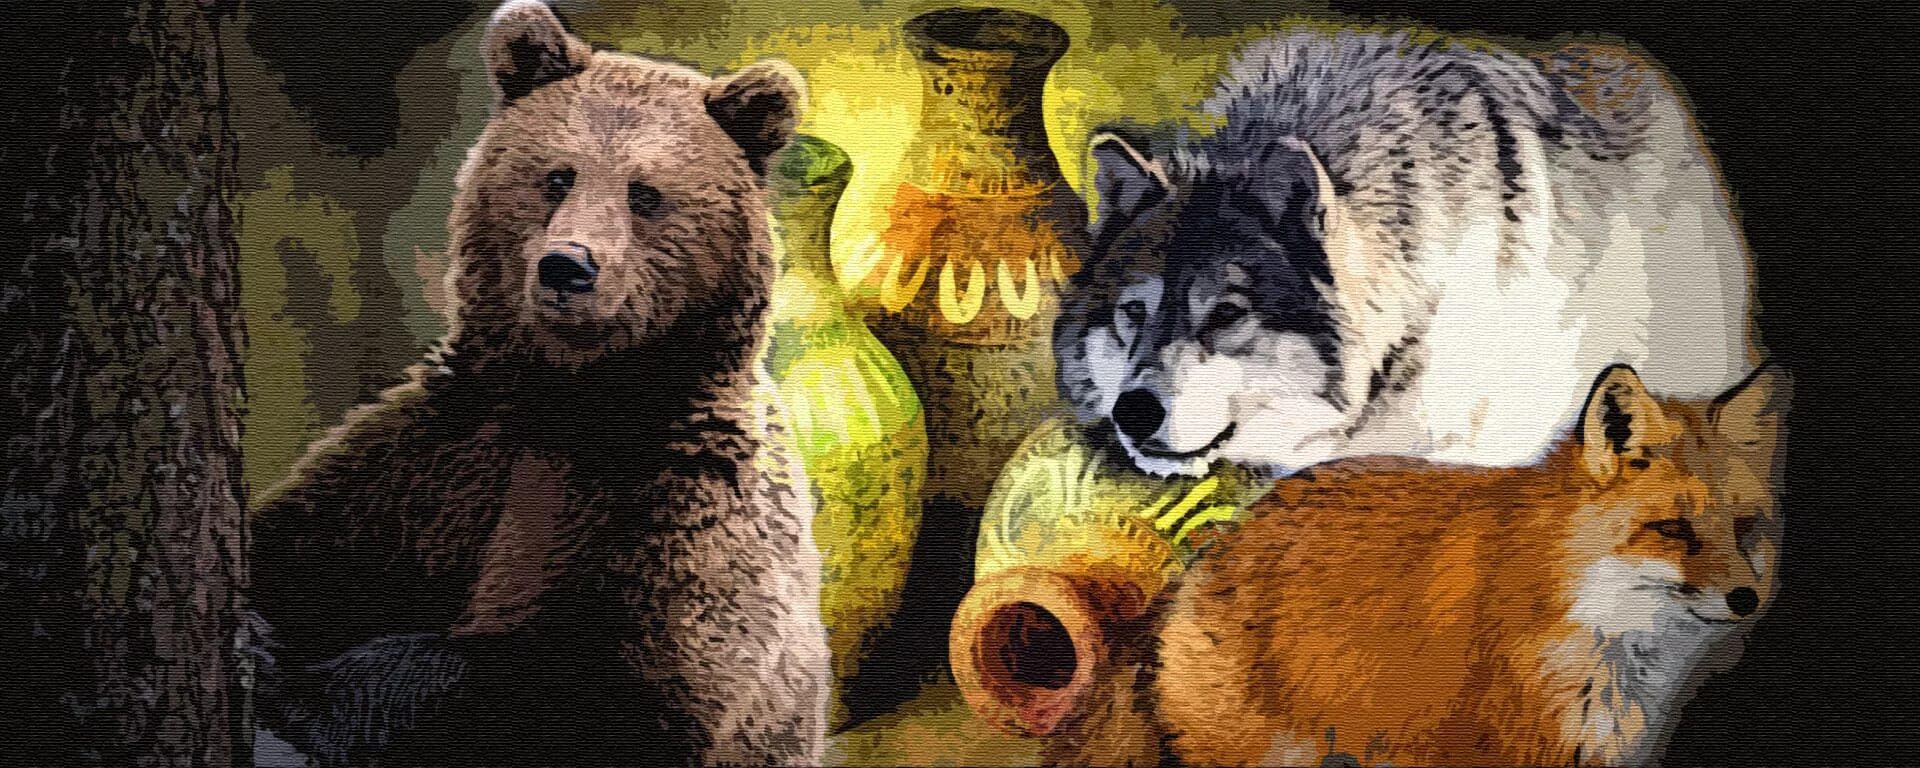 Картинка волк лиса медведь. Лиса, волк и медведь. Медведь и лиса. Волки и медведи. Волки лисы и медведи.